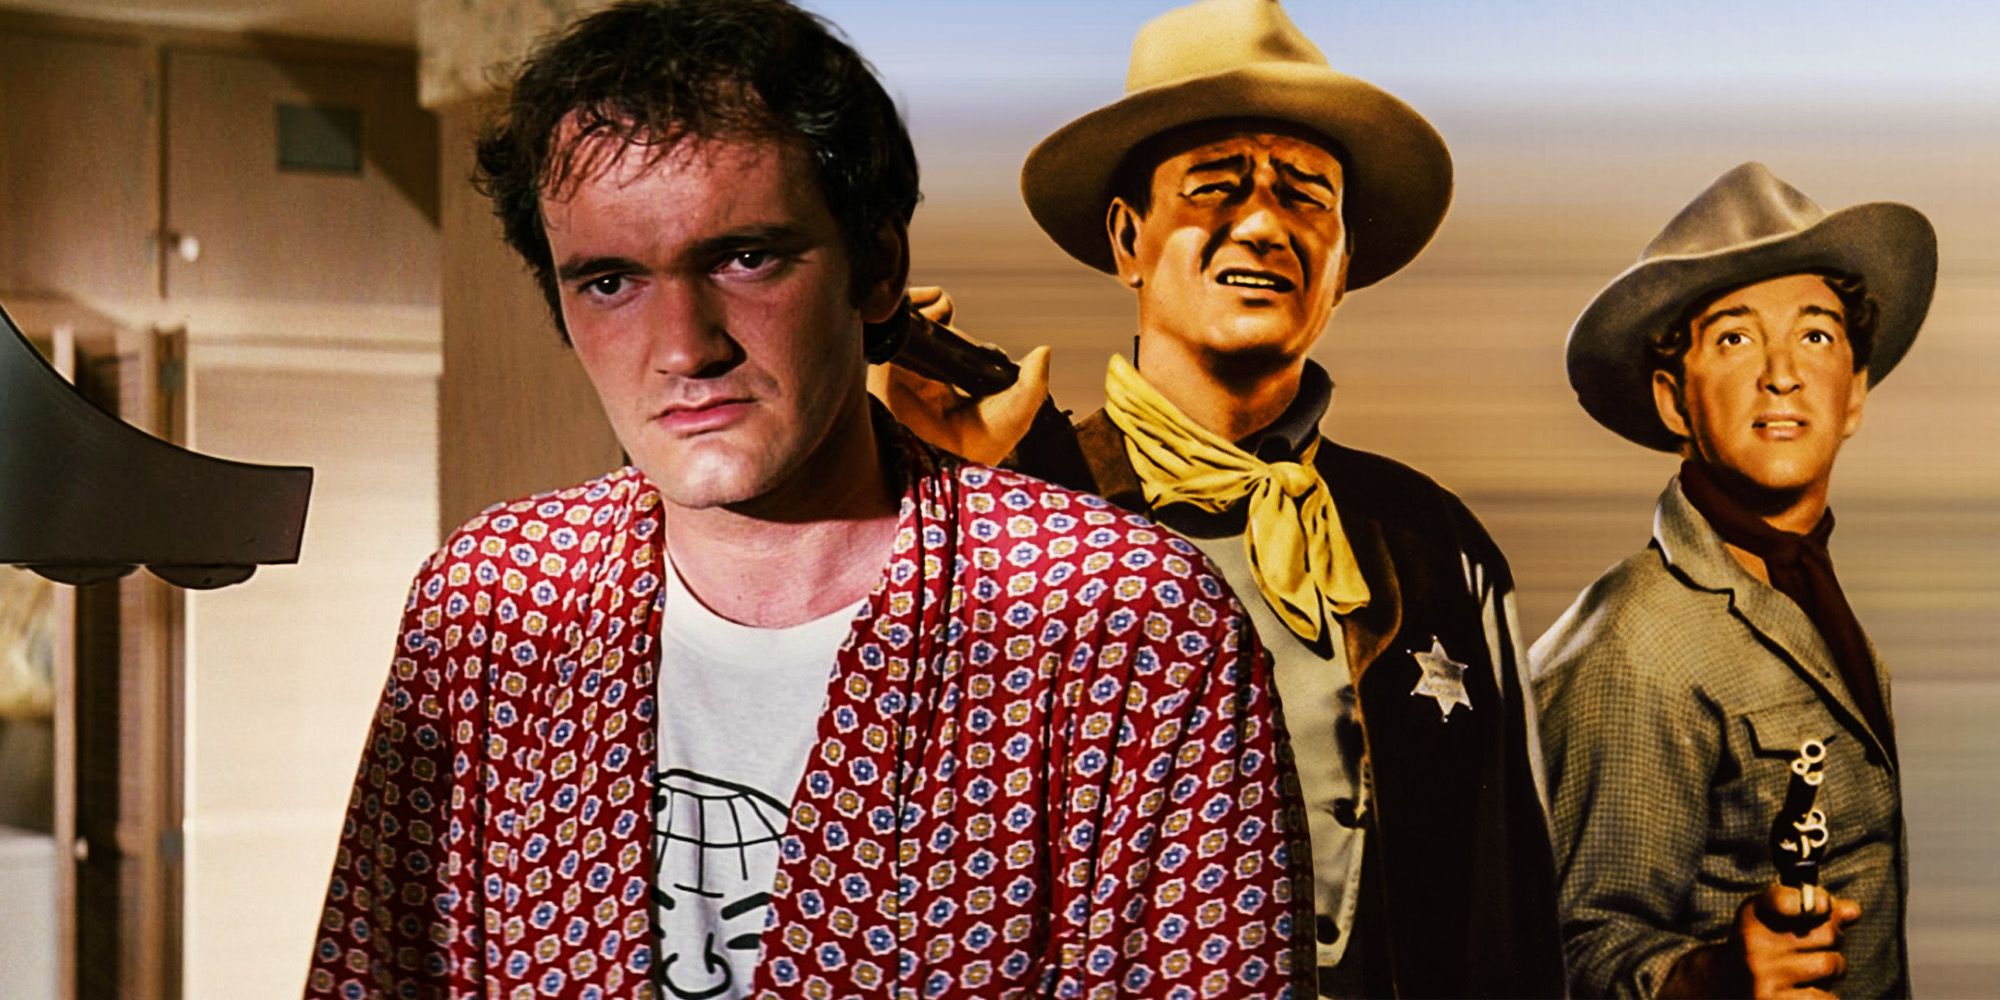 Rio Bravo Quentin Tarantino Favorite John Wayne Western Influenced His Career